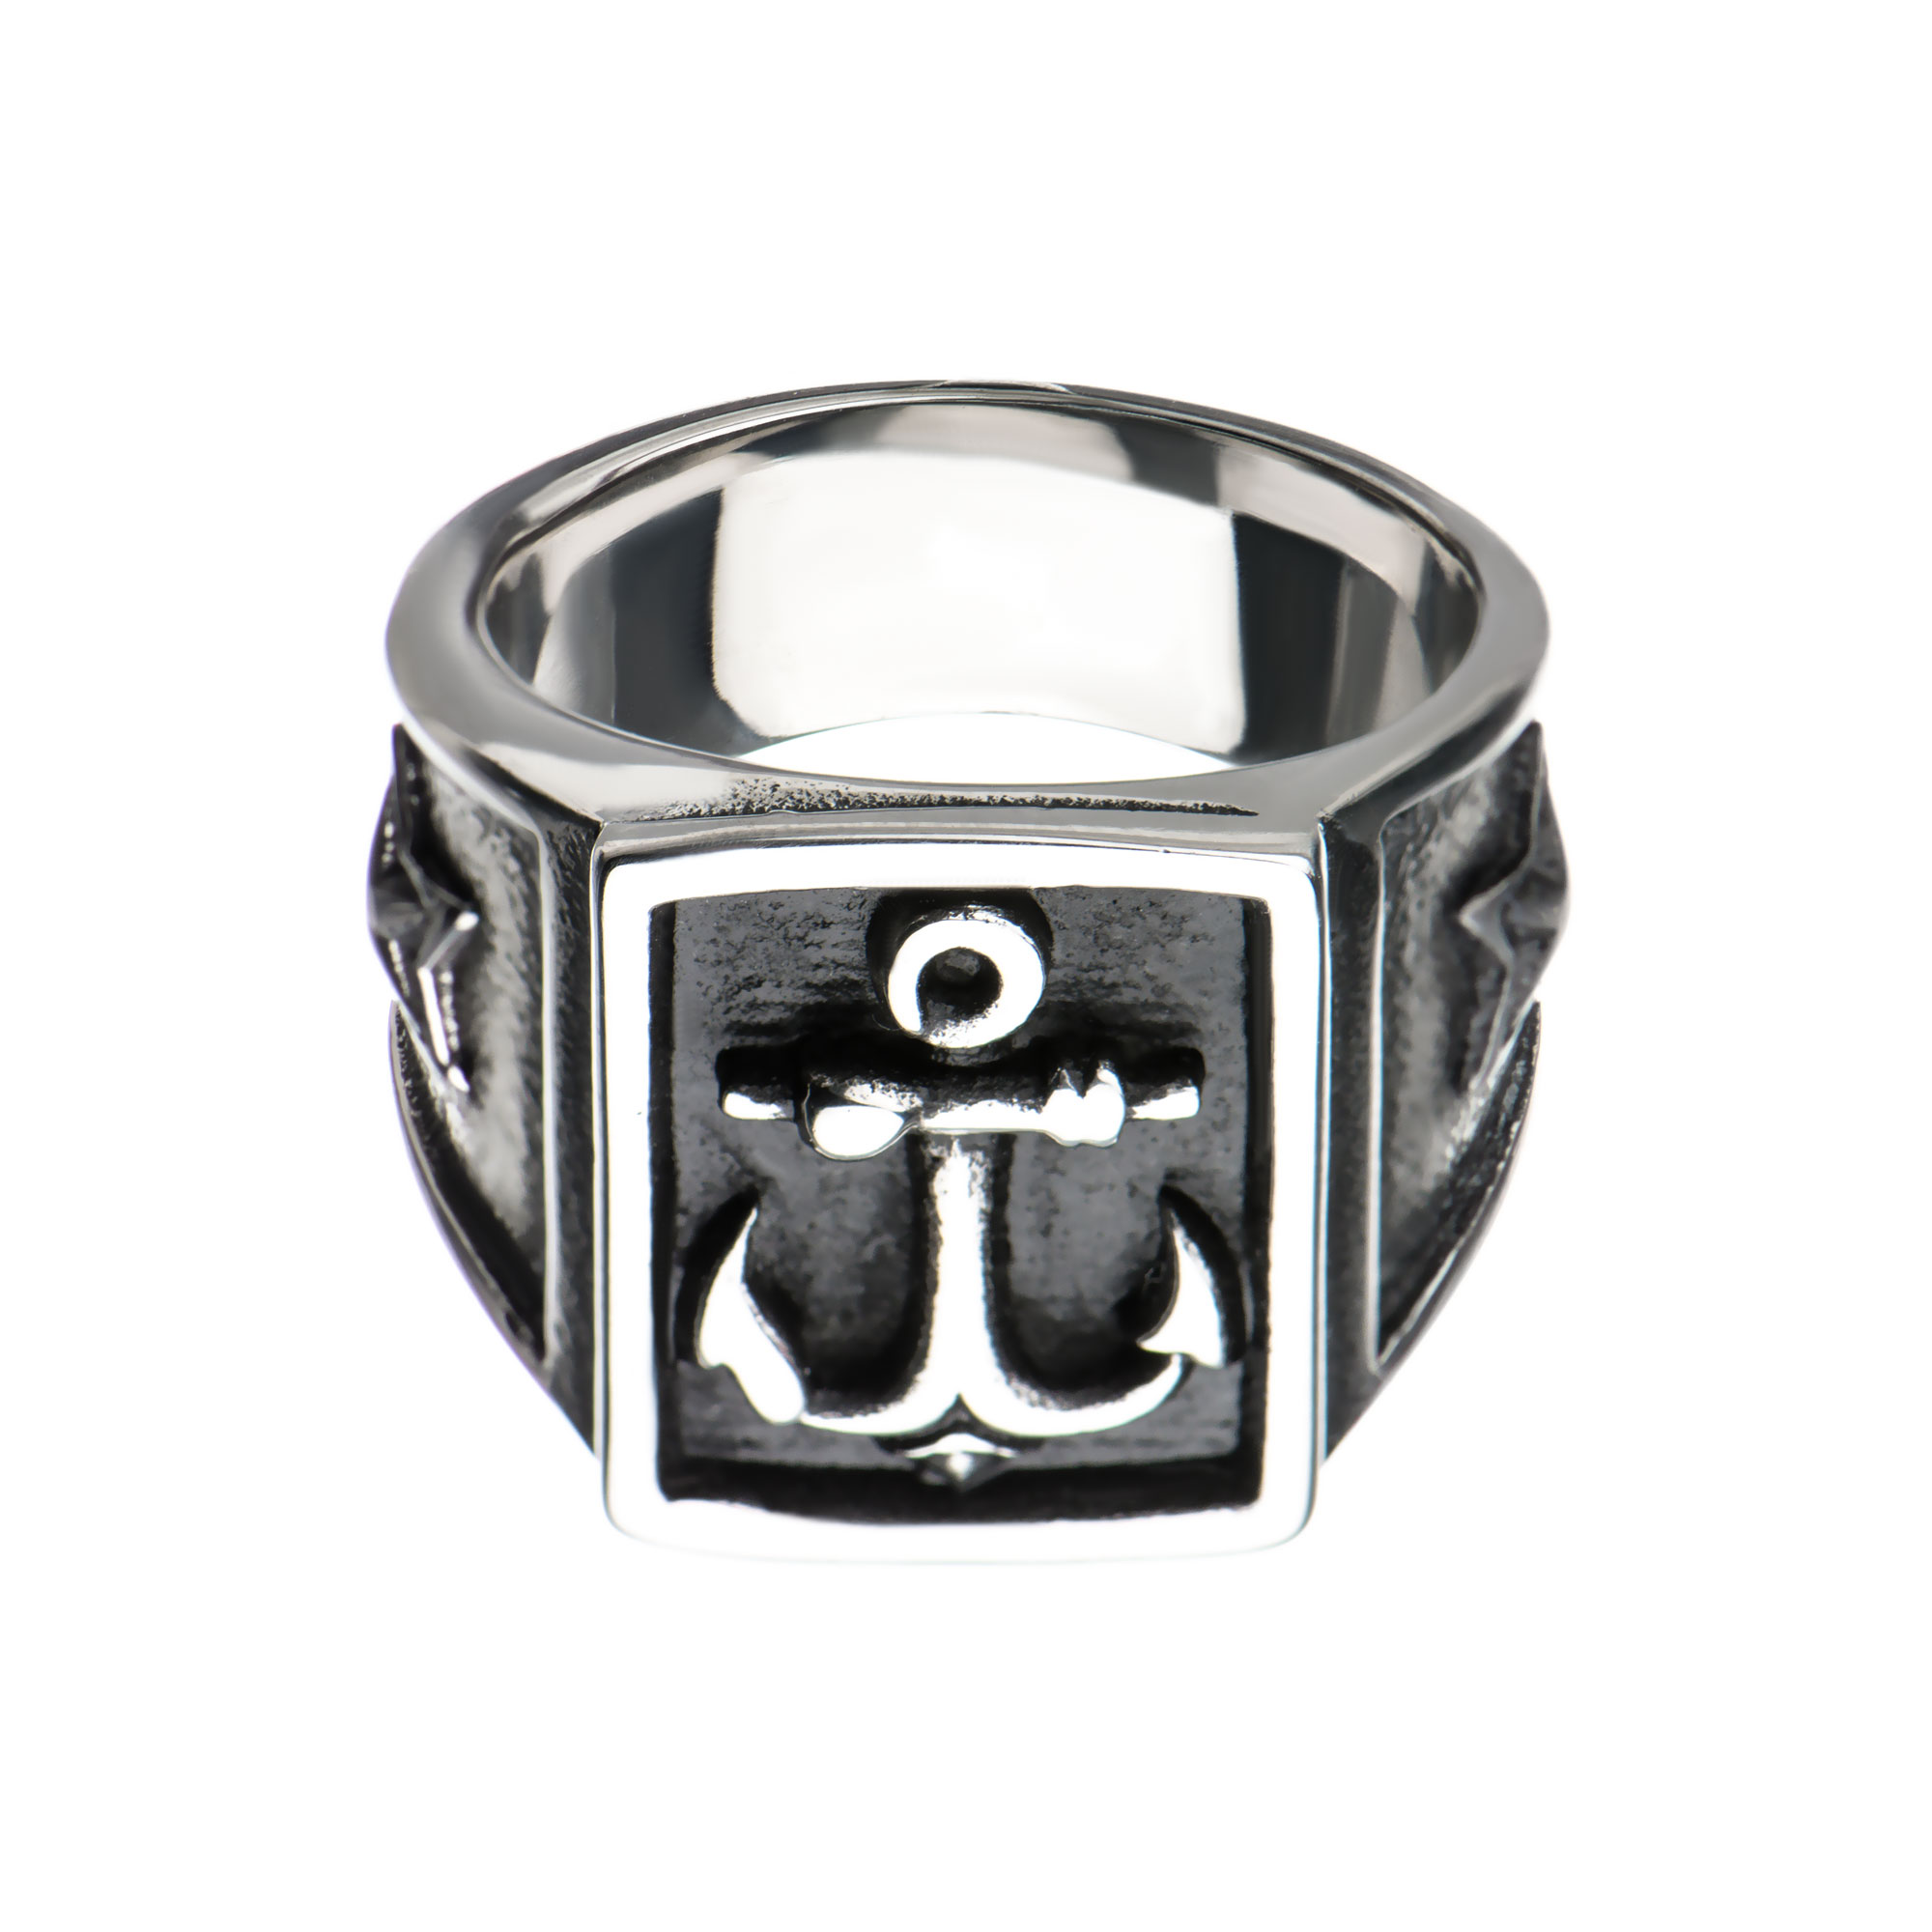 Steel & Black Plated Oxidized Anchor Signet Ring Image 2 P.K. Bennett Jewelers Mundelein, IL